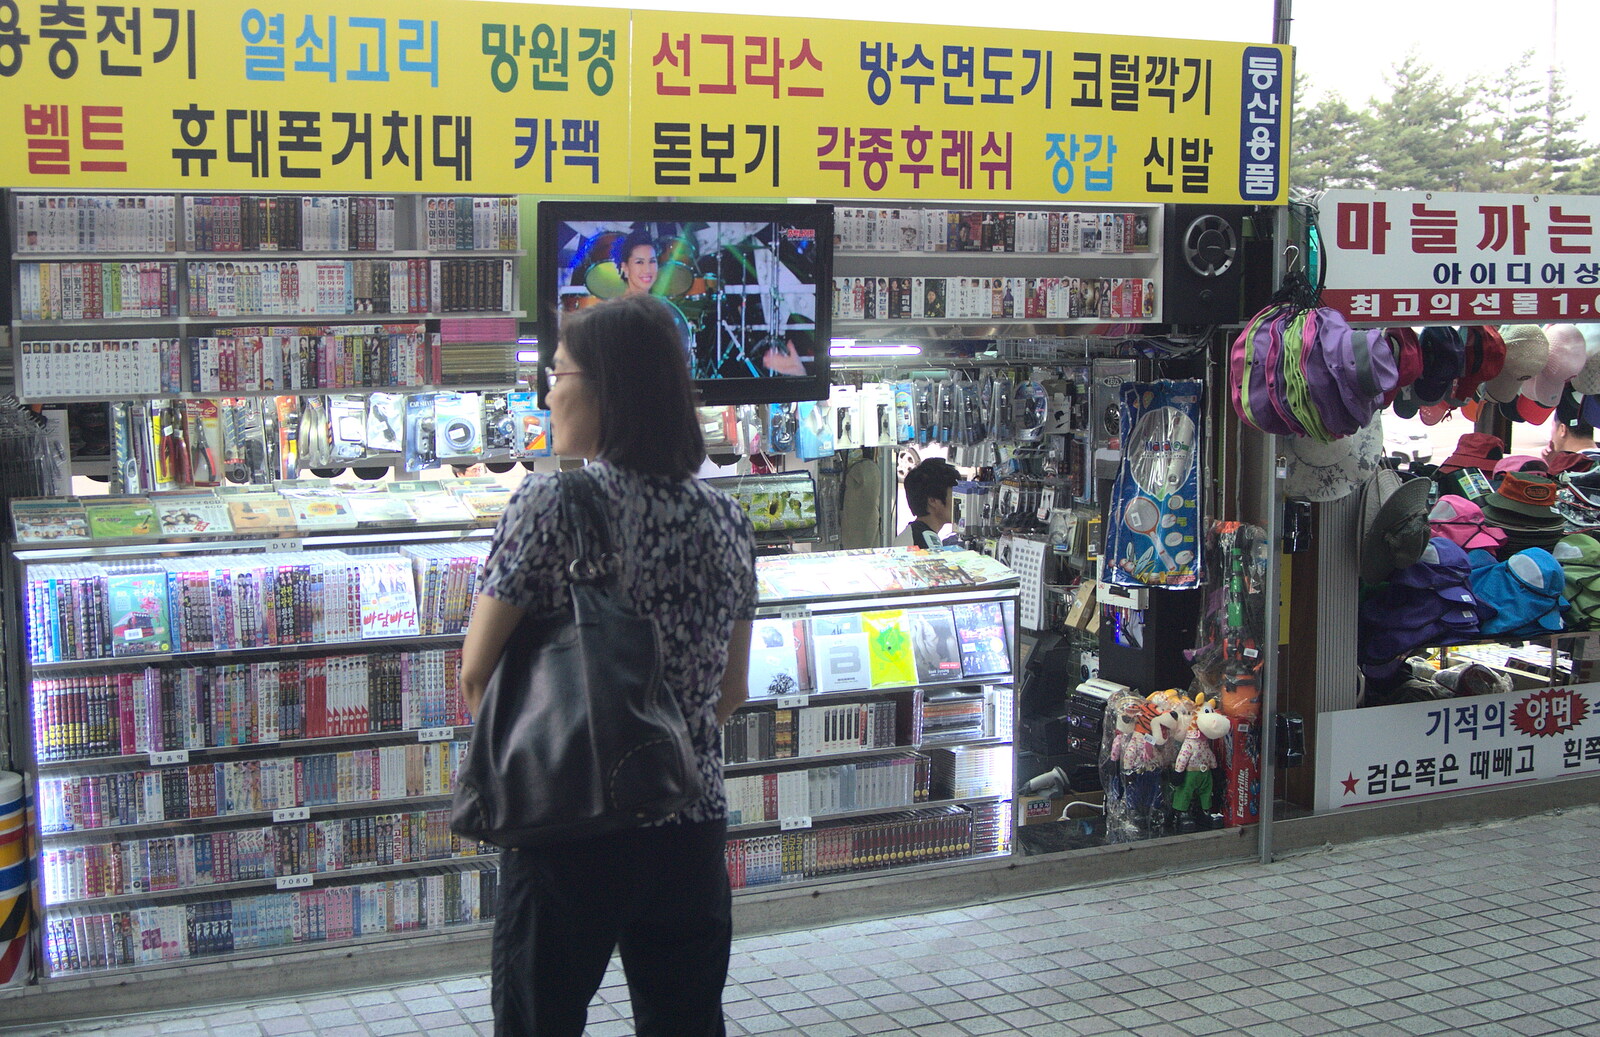 A DVD shop from Working at Samsung, and Geumosan Mountain, Gumi, Gyeongsangbuk-do, Korea - 24th June 2012